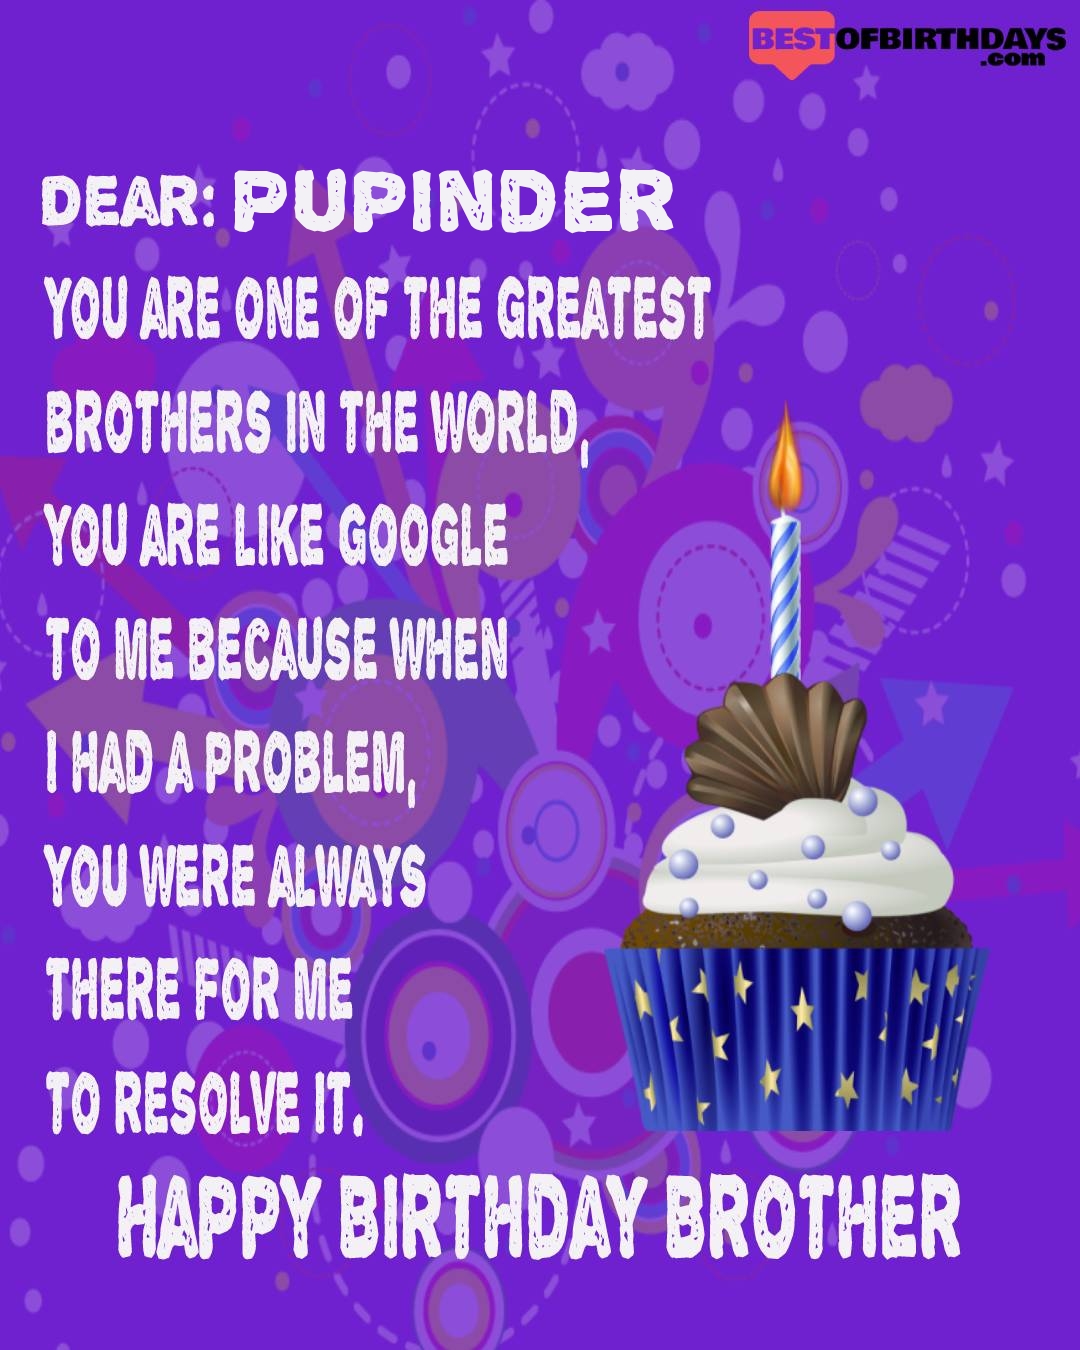 Happy birthday pupinder bhai brother bro